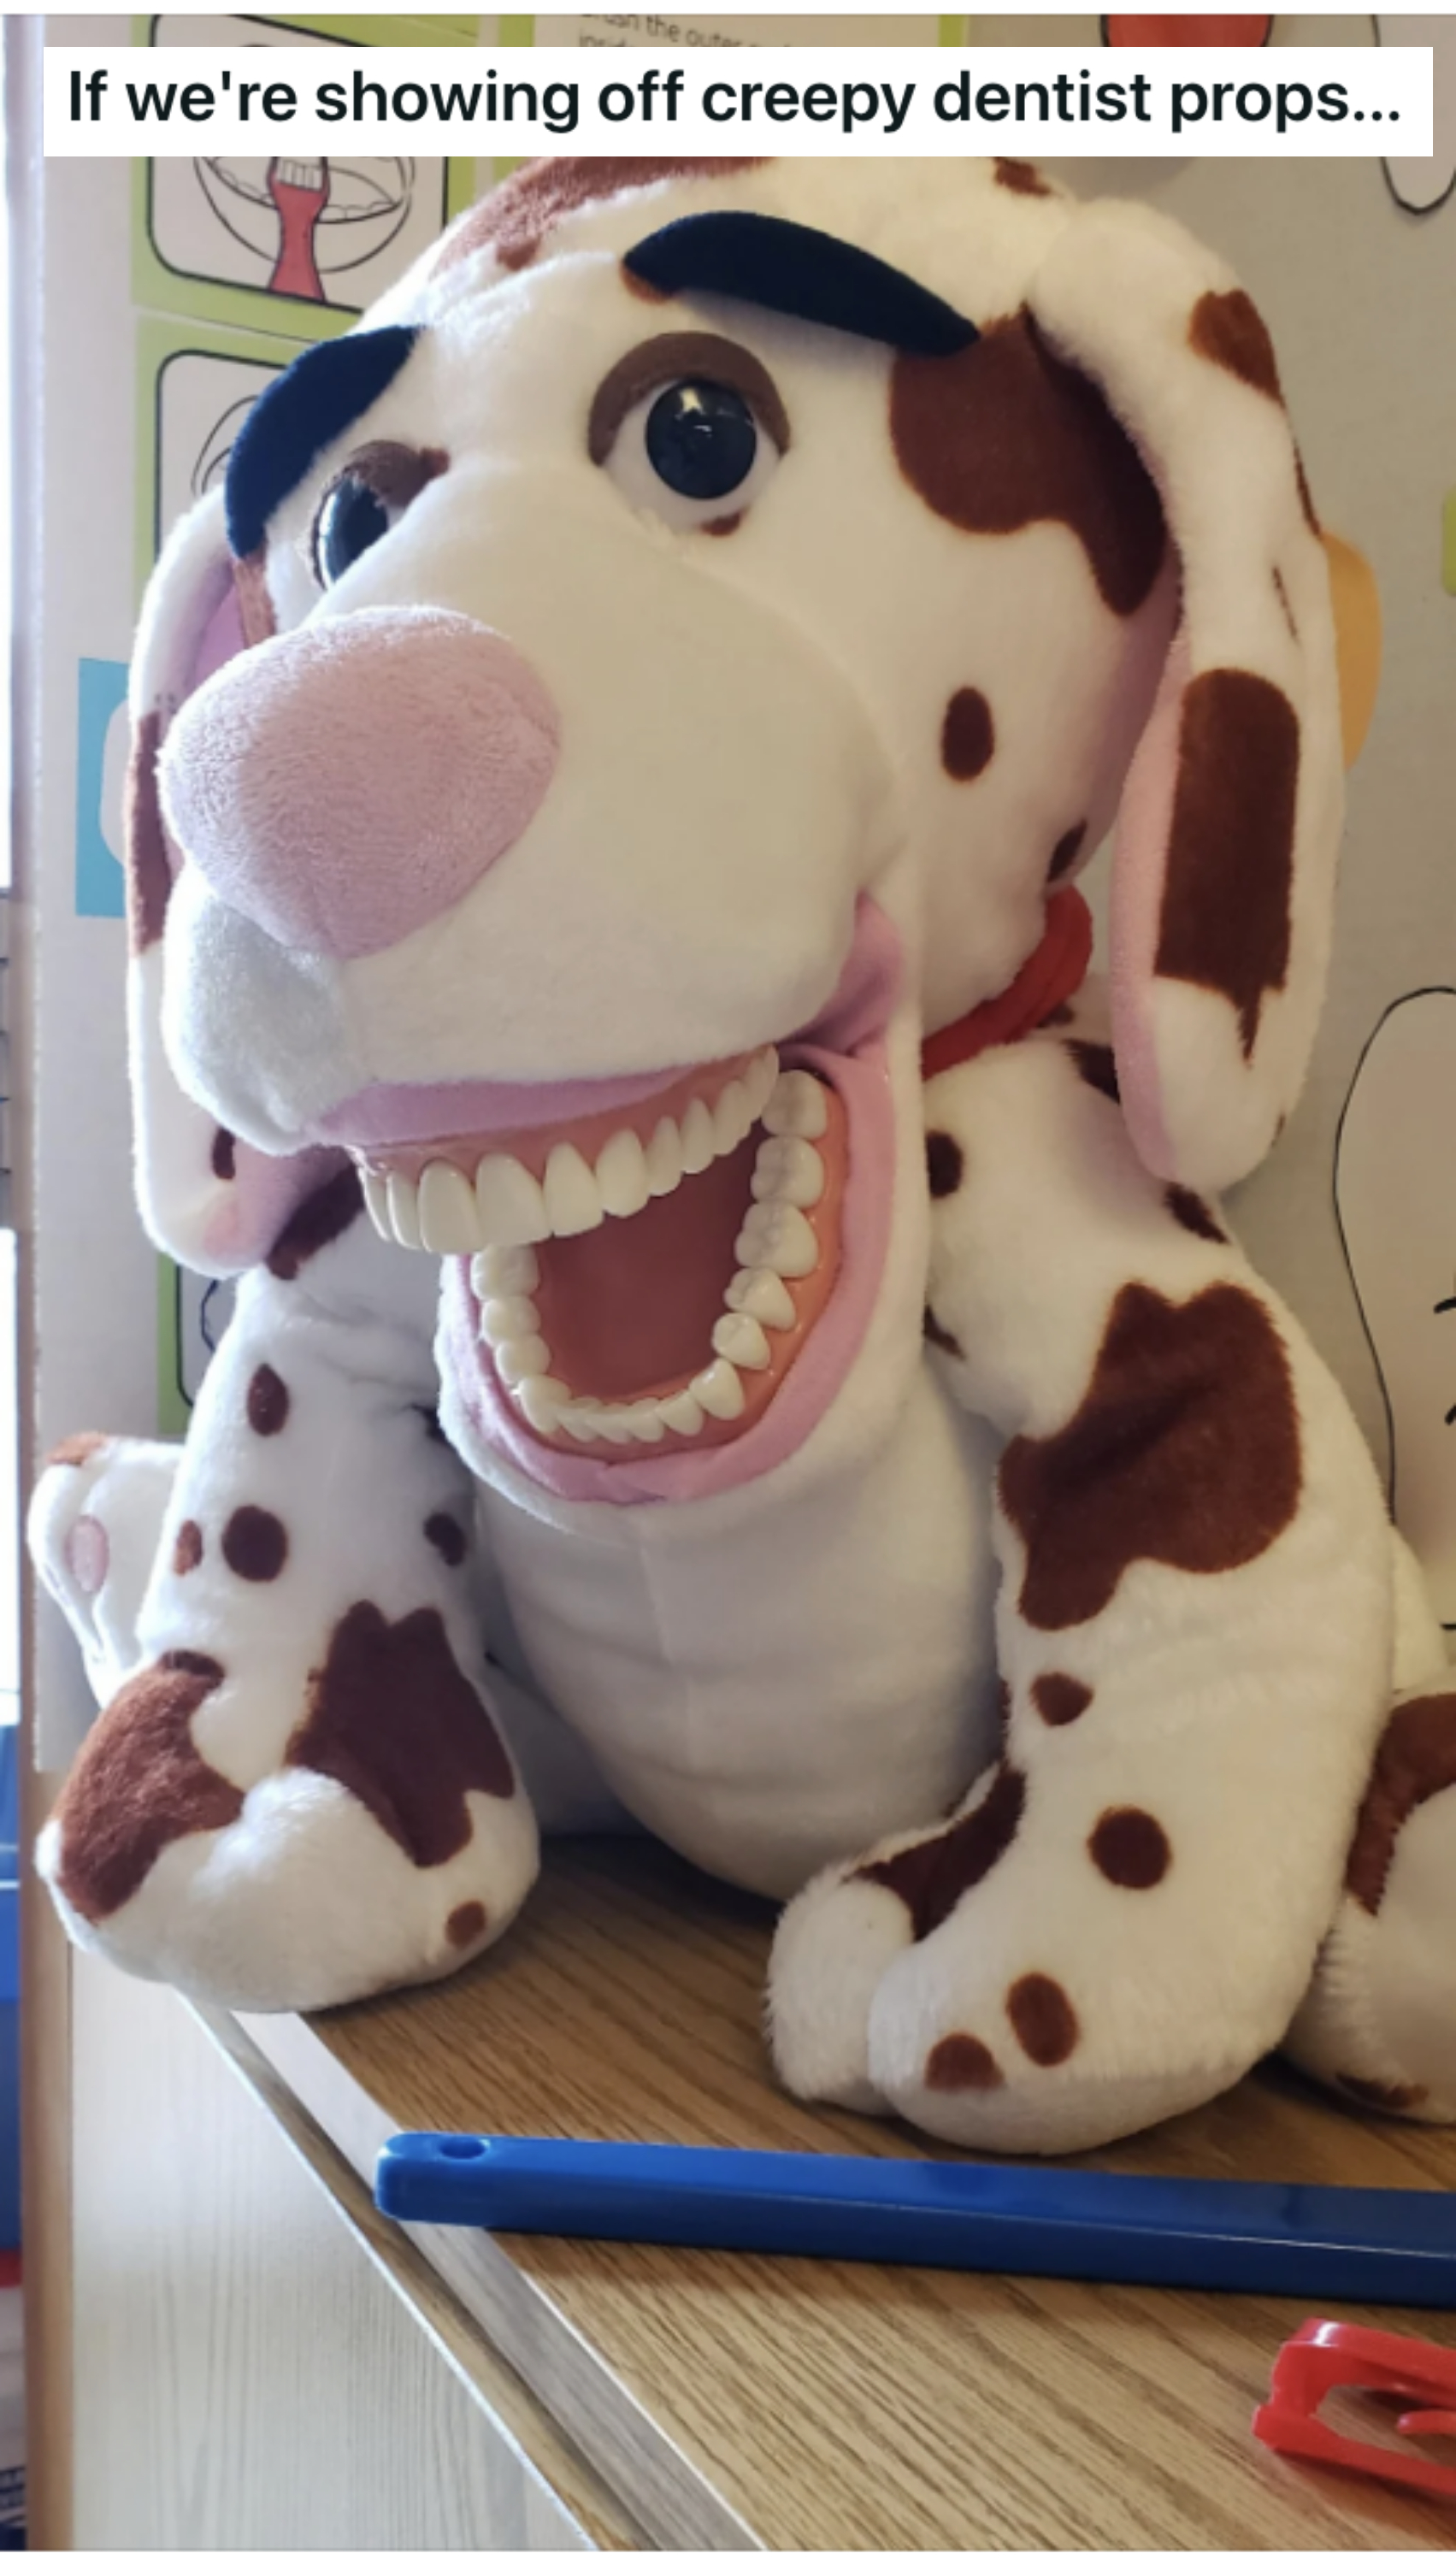 a stuffed animal with human teeth